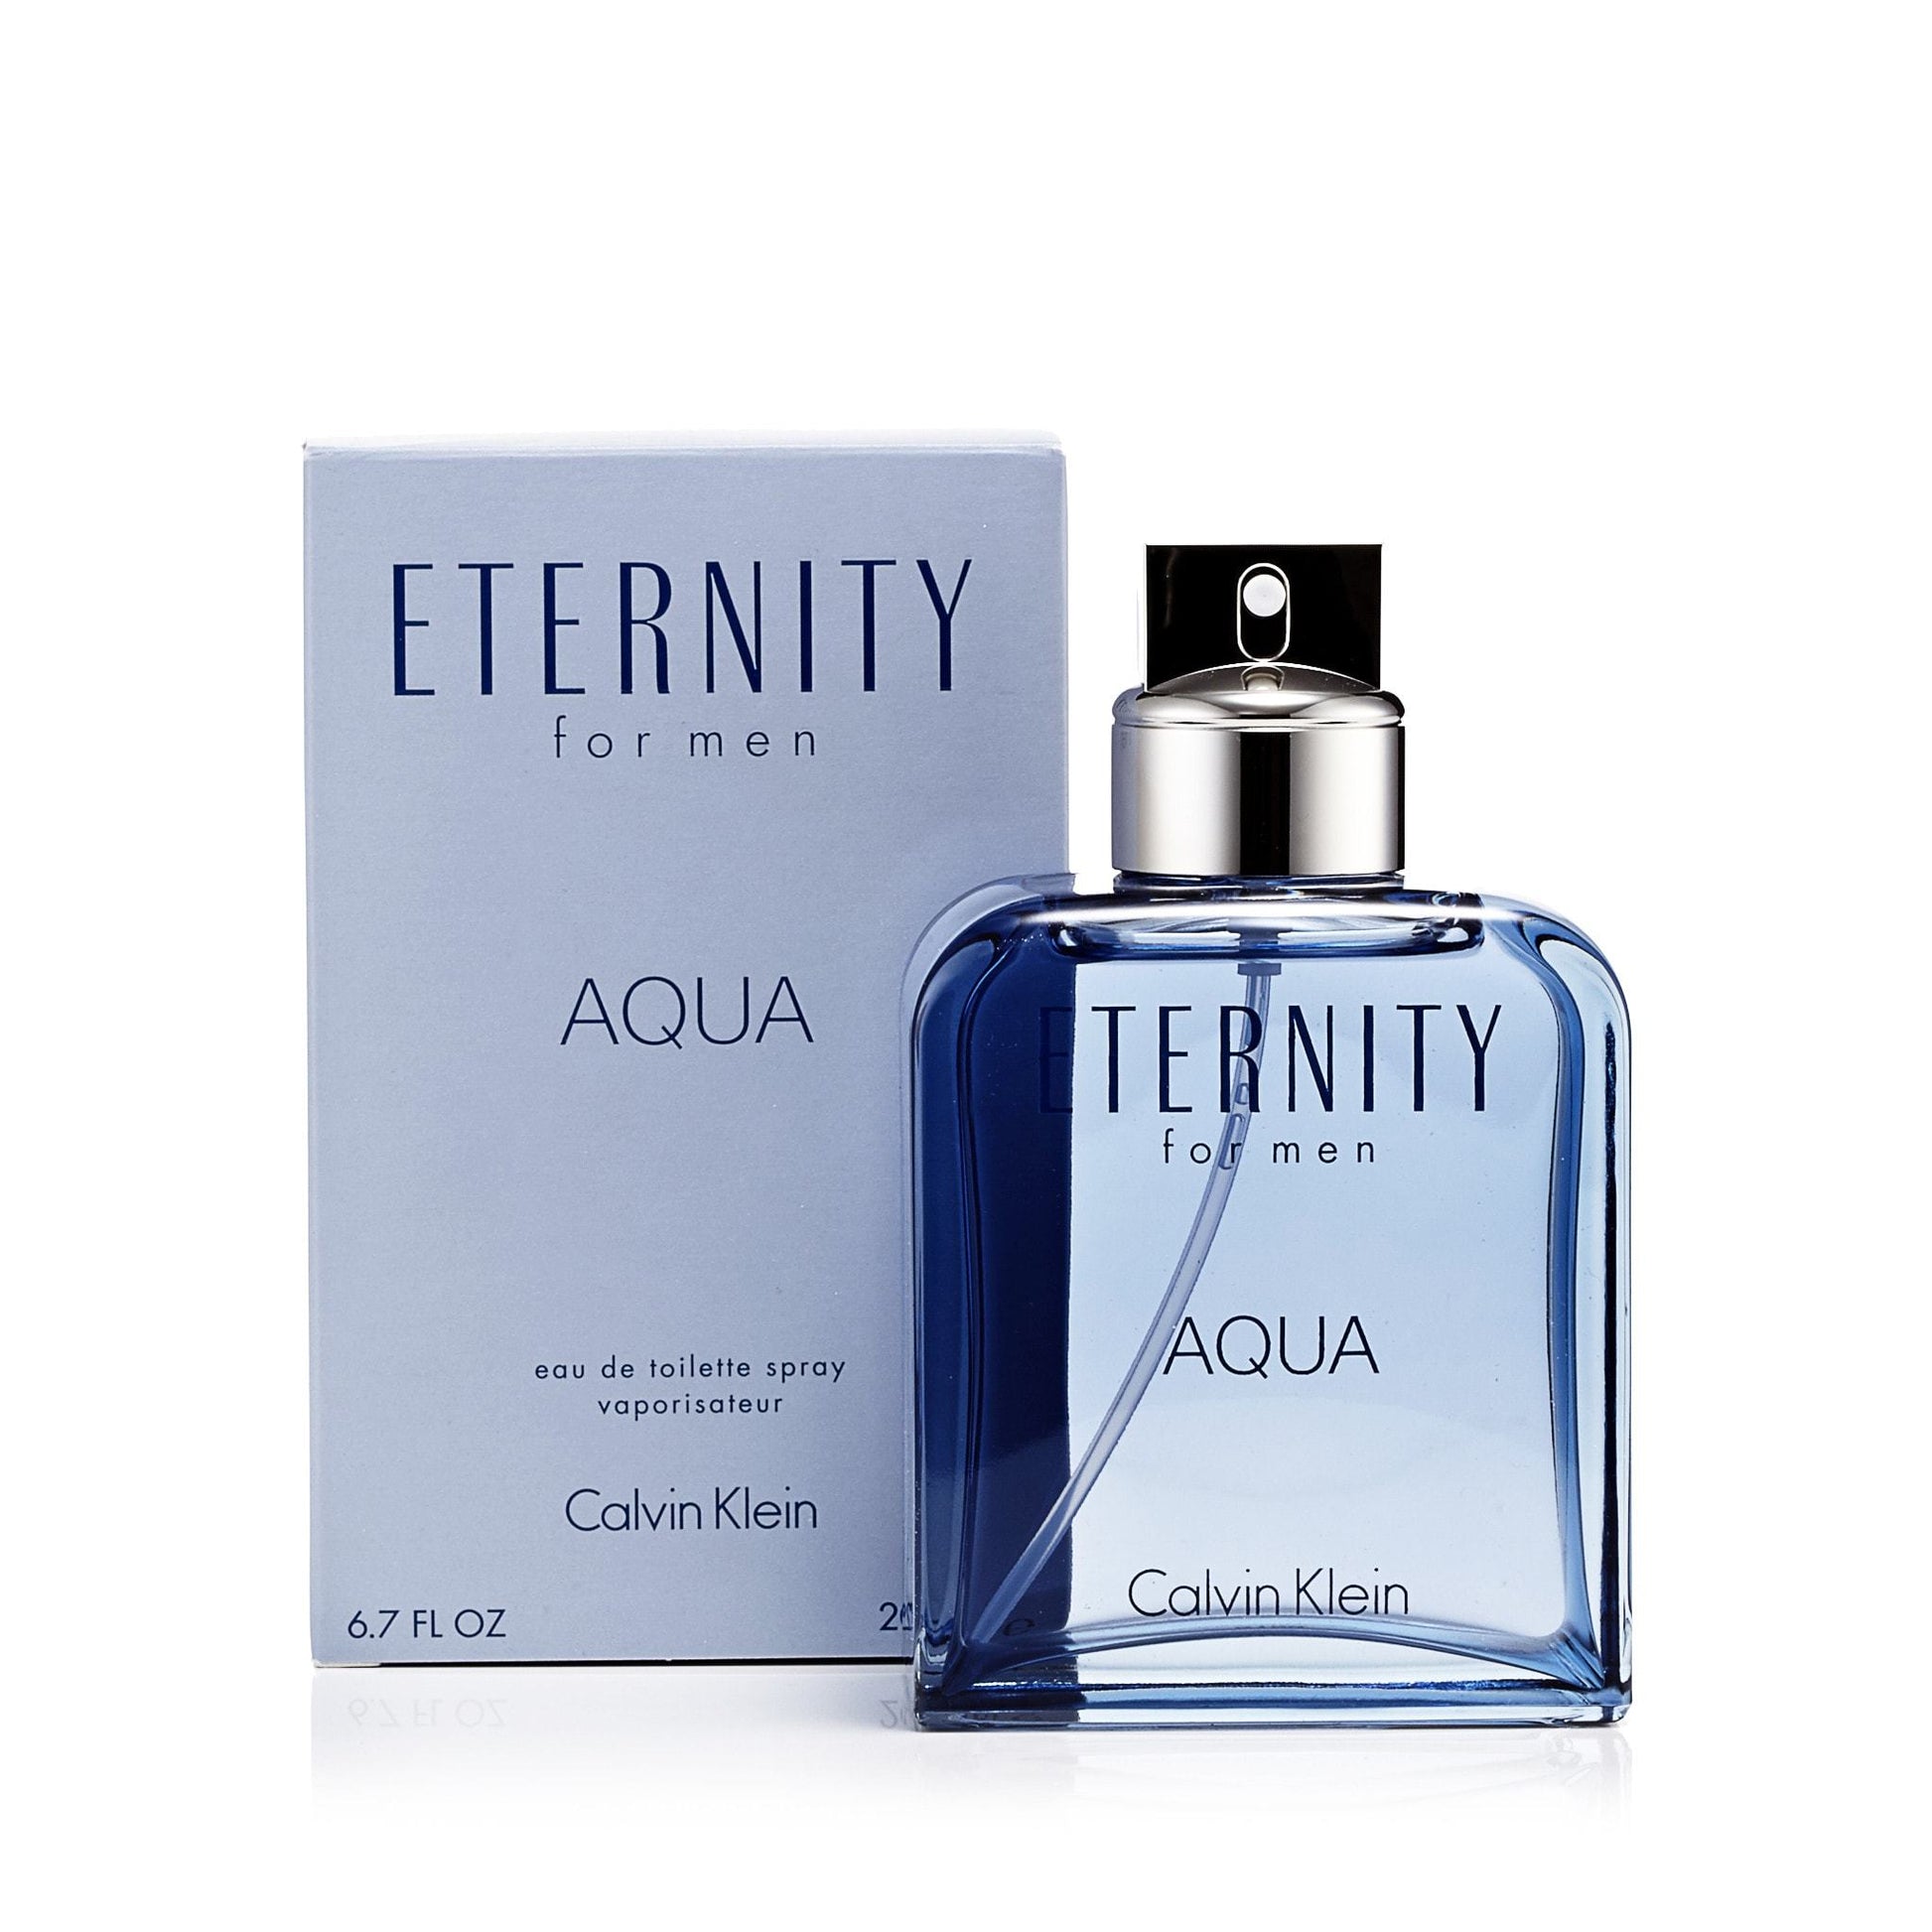 Eternity Aqua EDT for Men Fragrance by Calvin Klein Outlet –